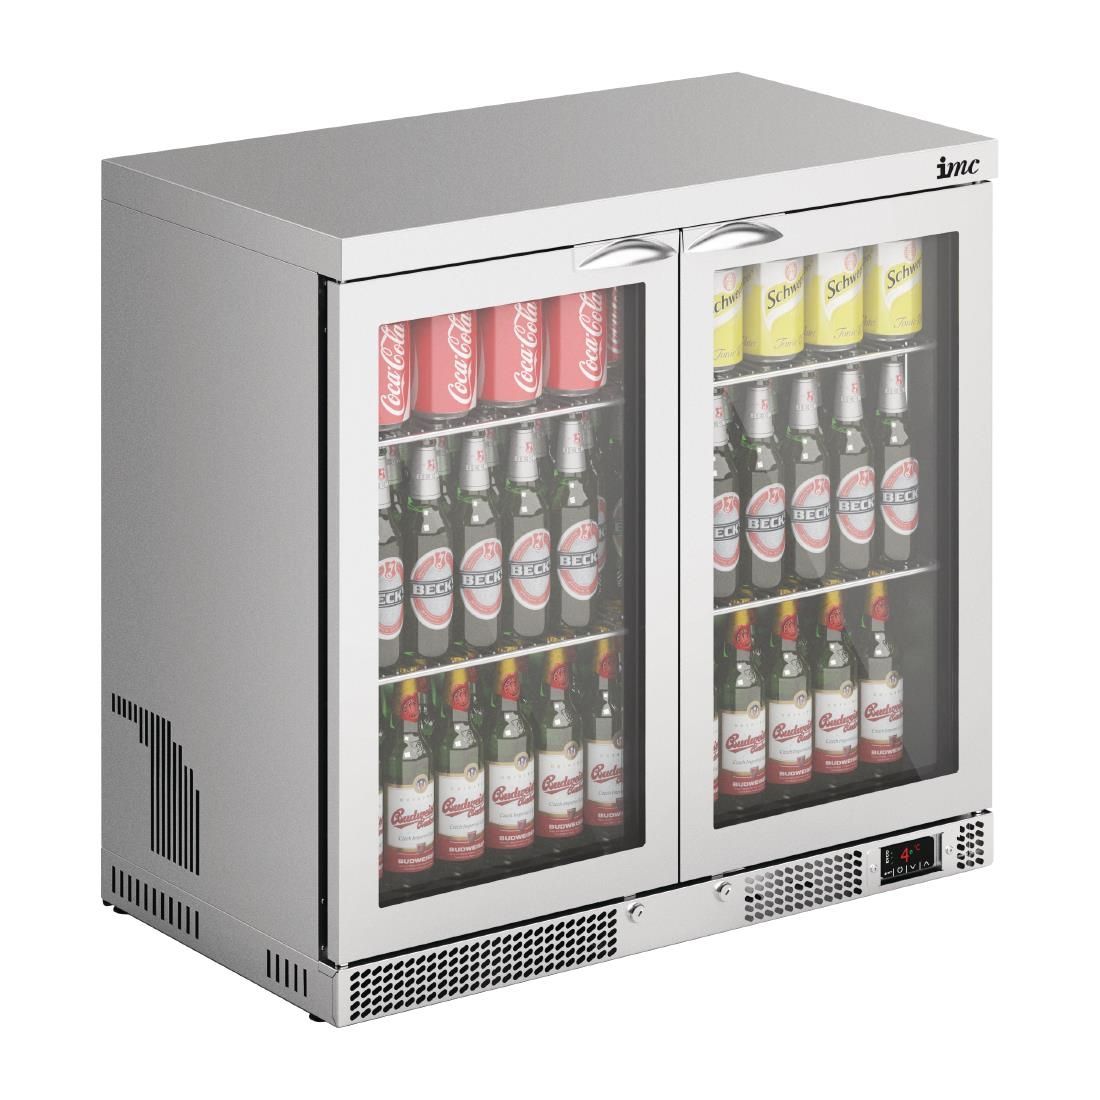 IMC Mistral M90 Double Door Bottle Cooler 185Ltr F77/251 JD Catering Equipment Solutions Ltd